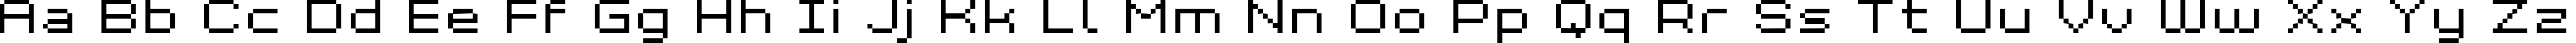 Пример написания английского алфавита шрифтом Grixel Kyrou 7 Wide Xtnd